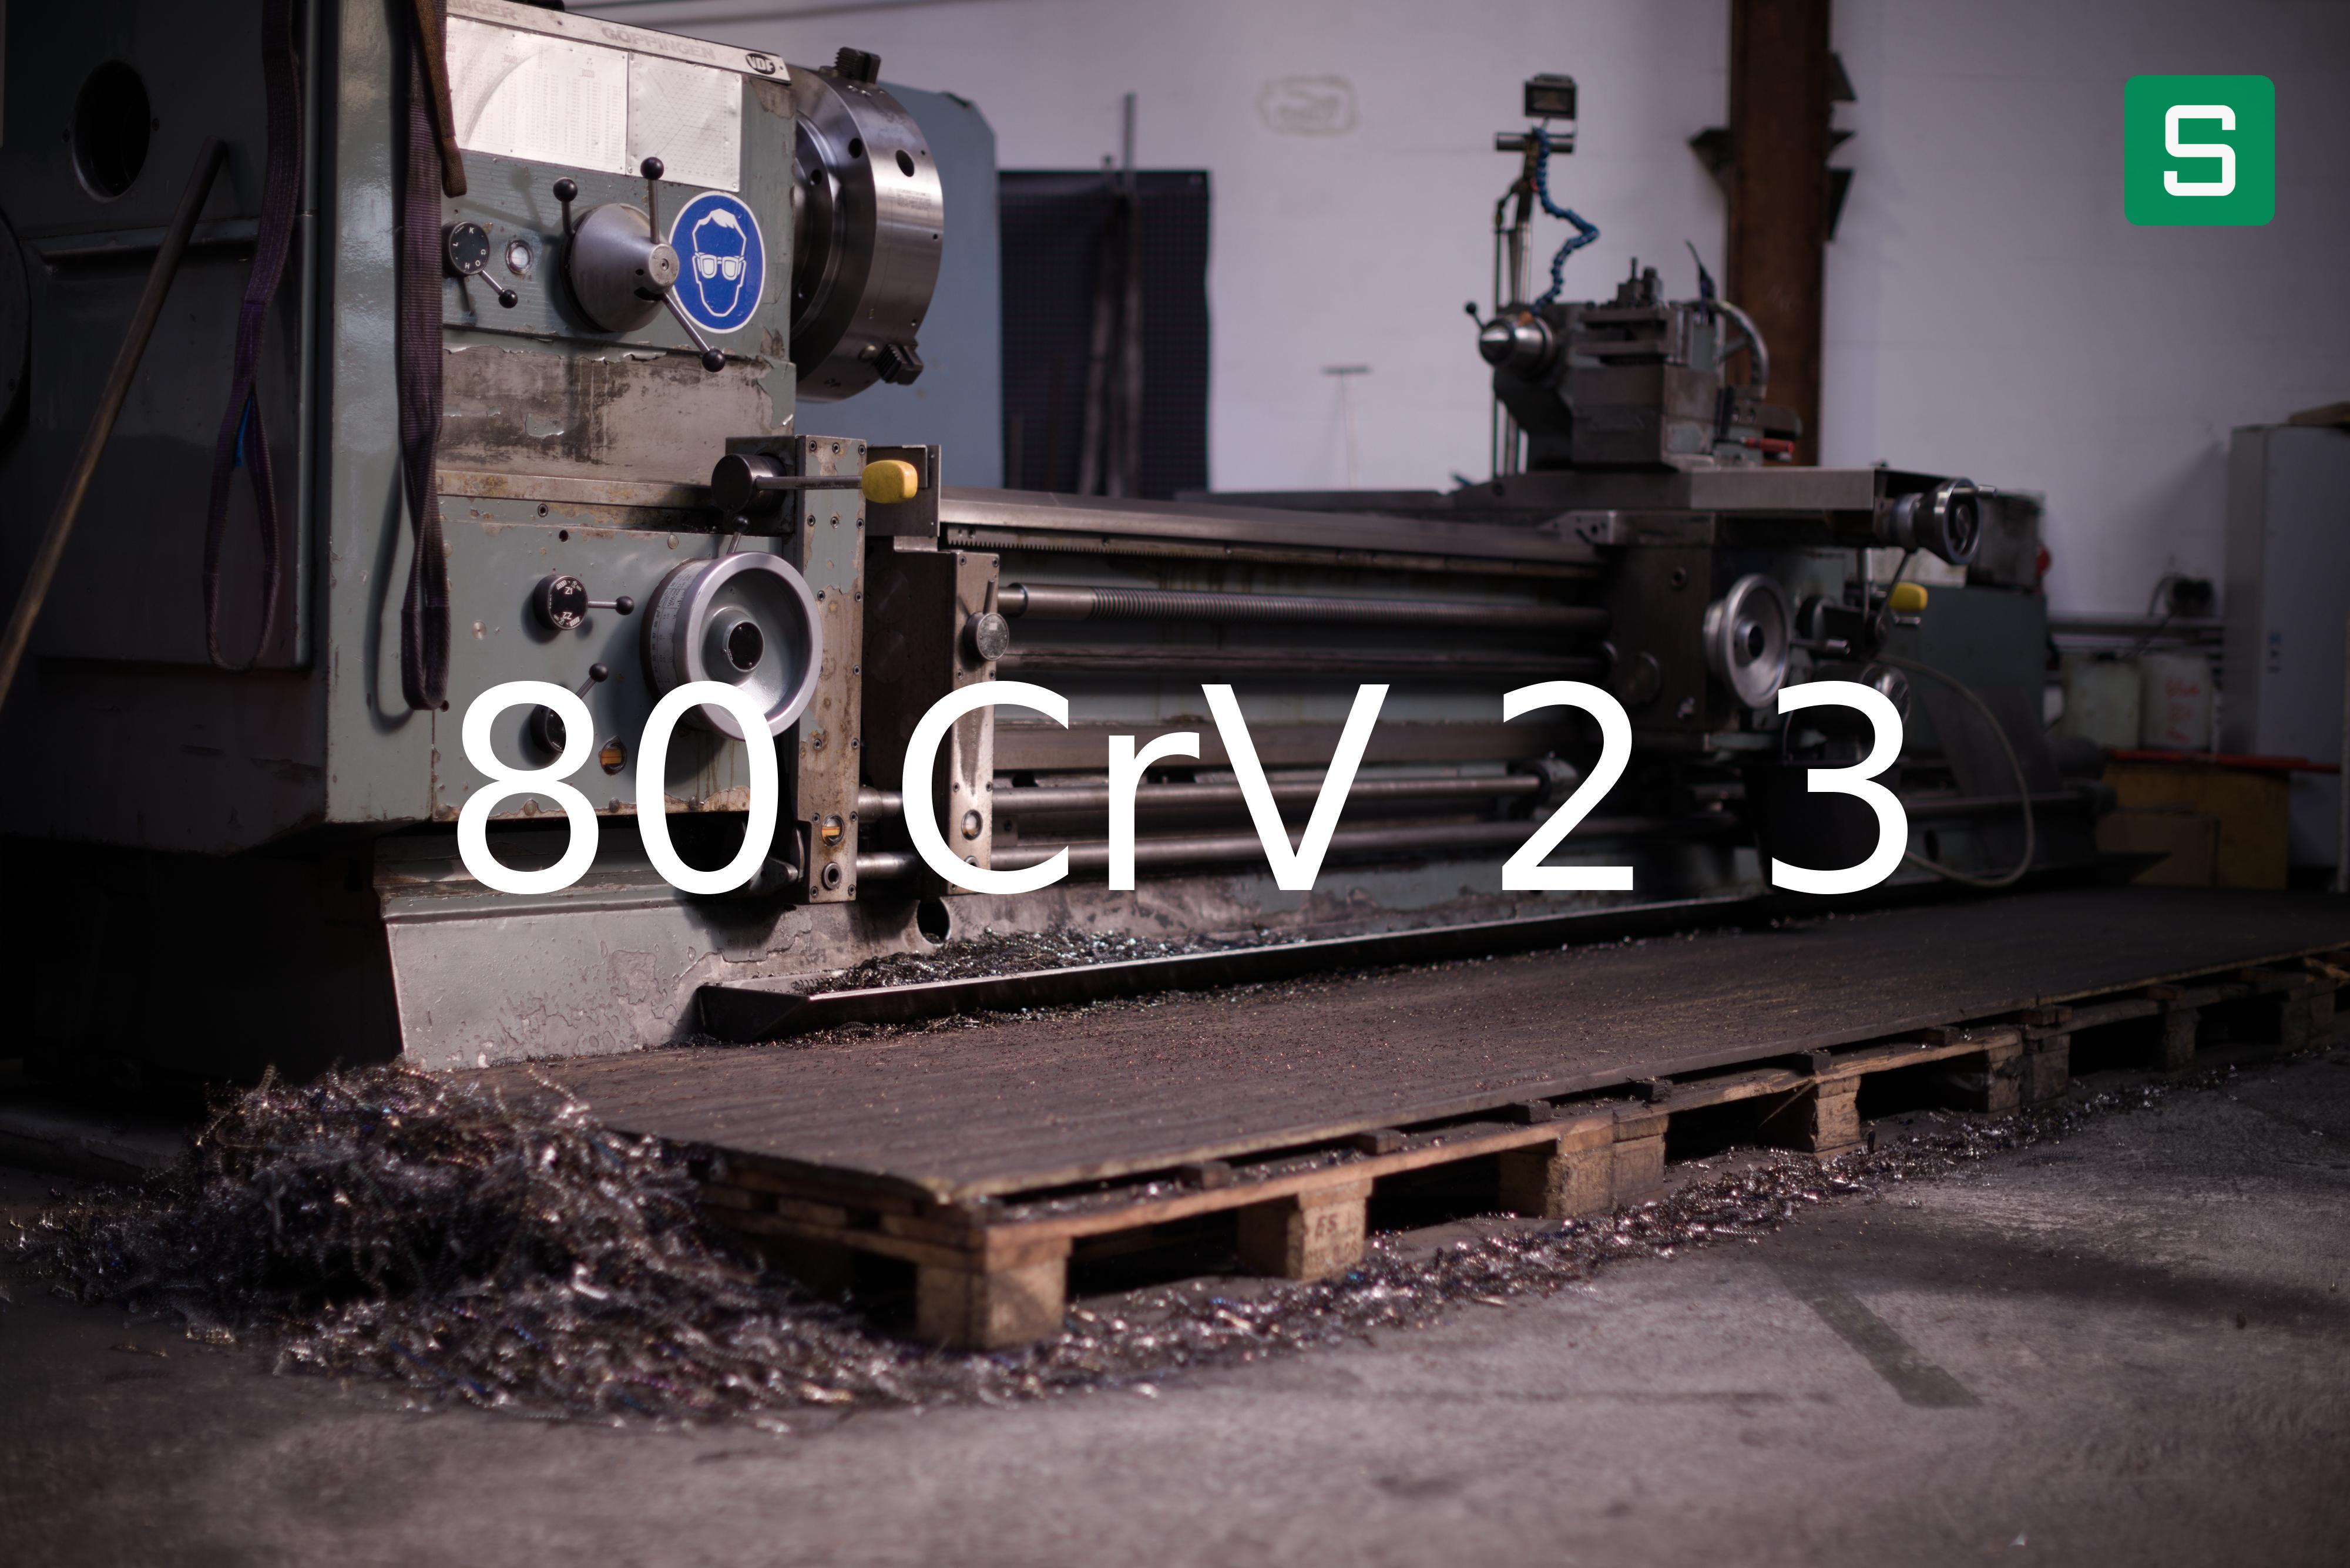 Steel Material: 80 CrV 2 3